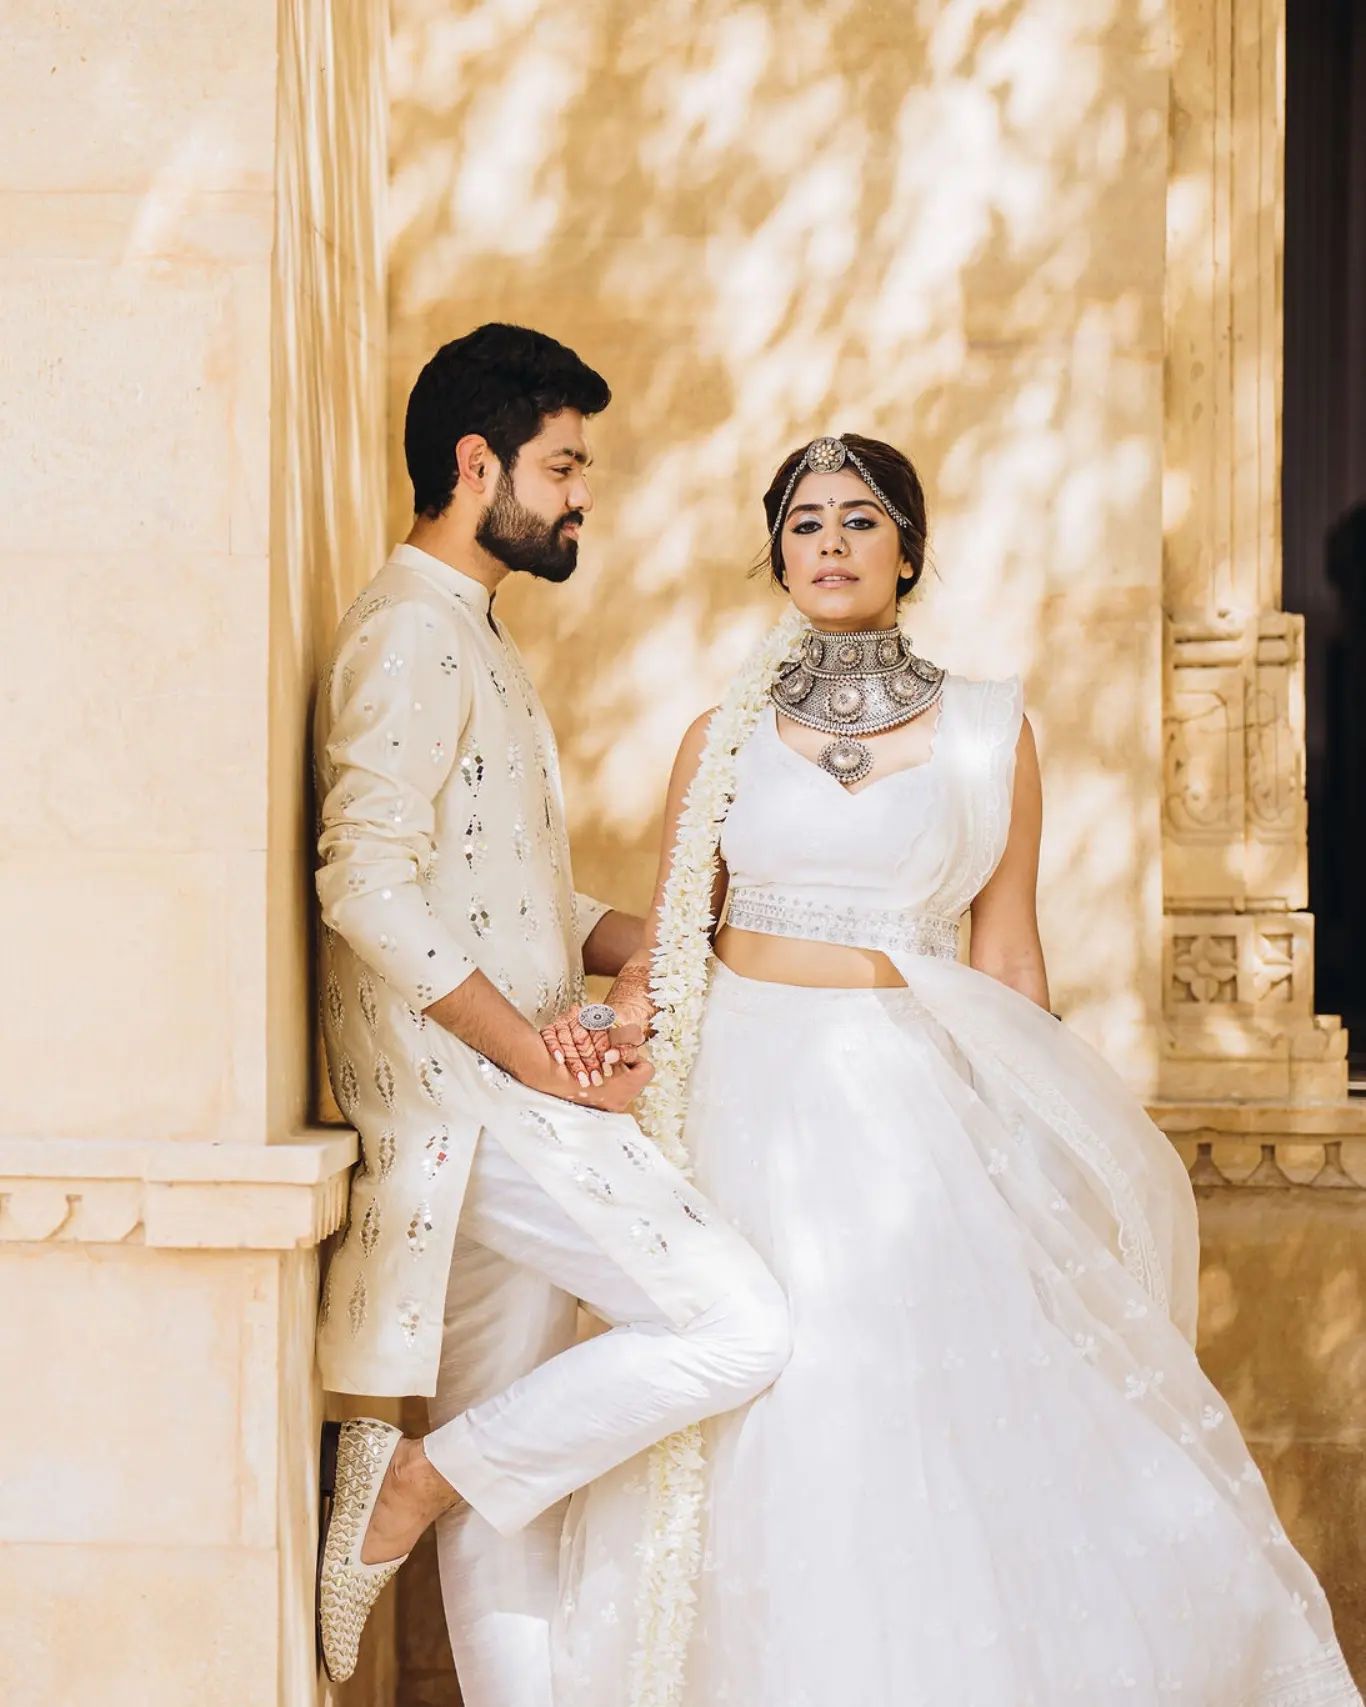 Mahira Khan's Magical Wedding Look: Decoding the White Embellished Lehenga  - PUNE.NEWS